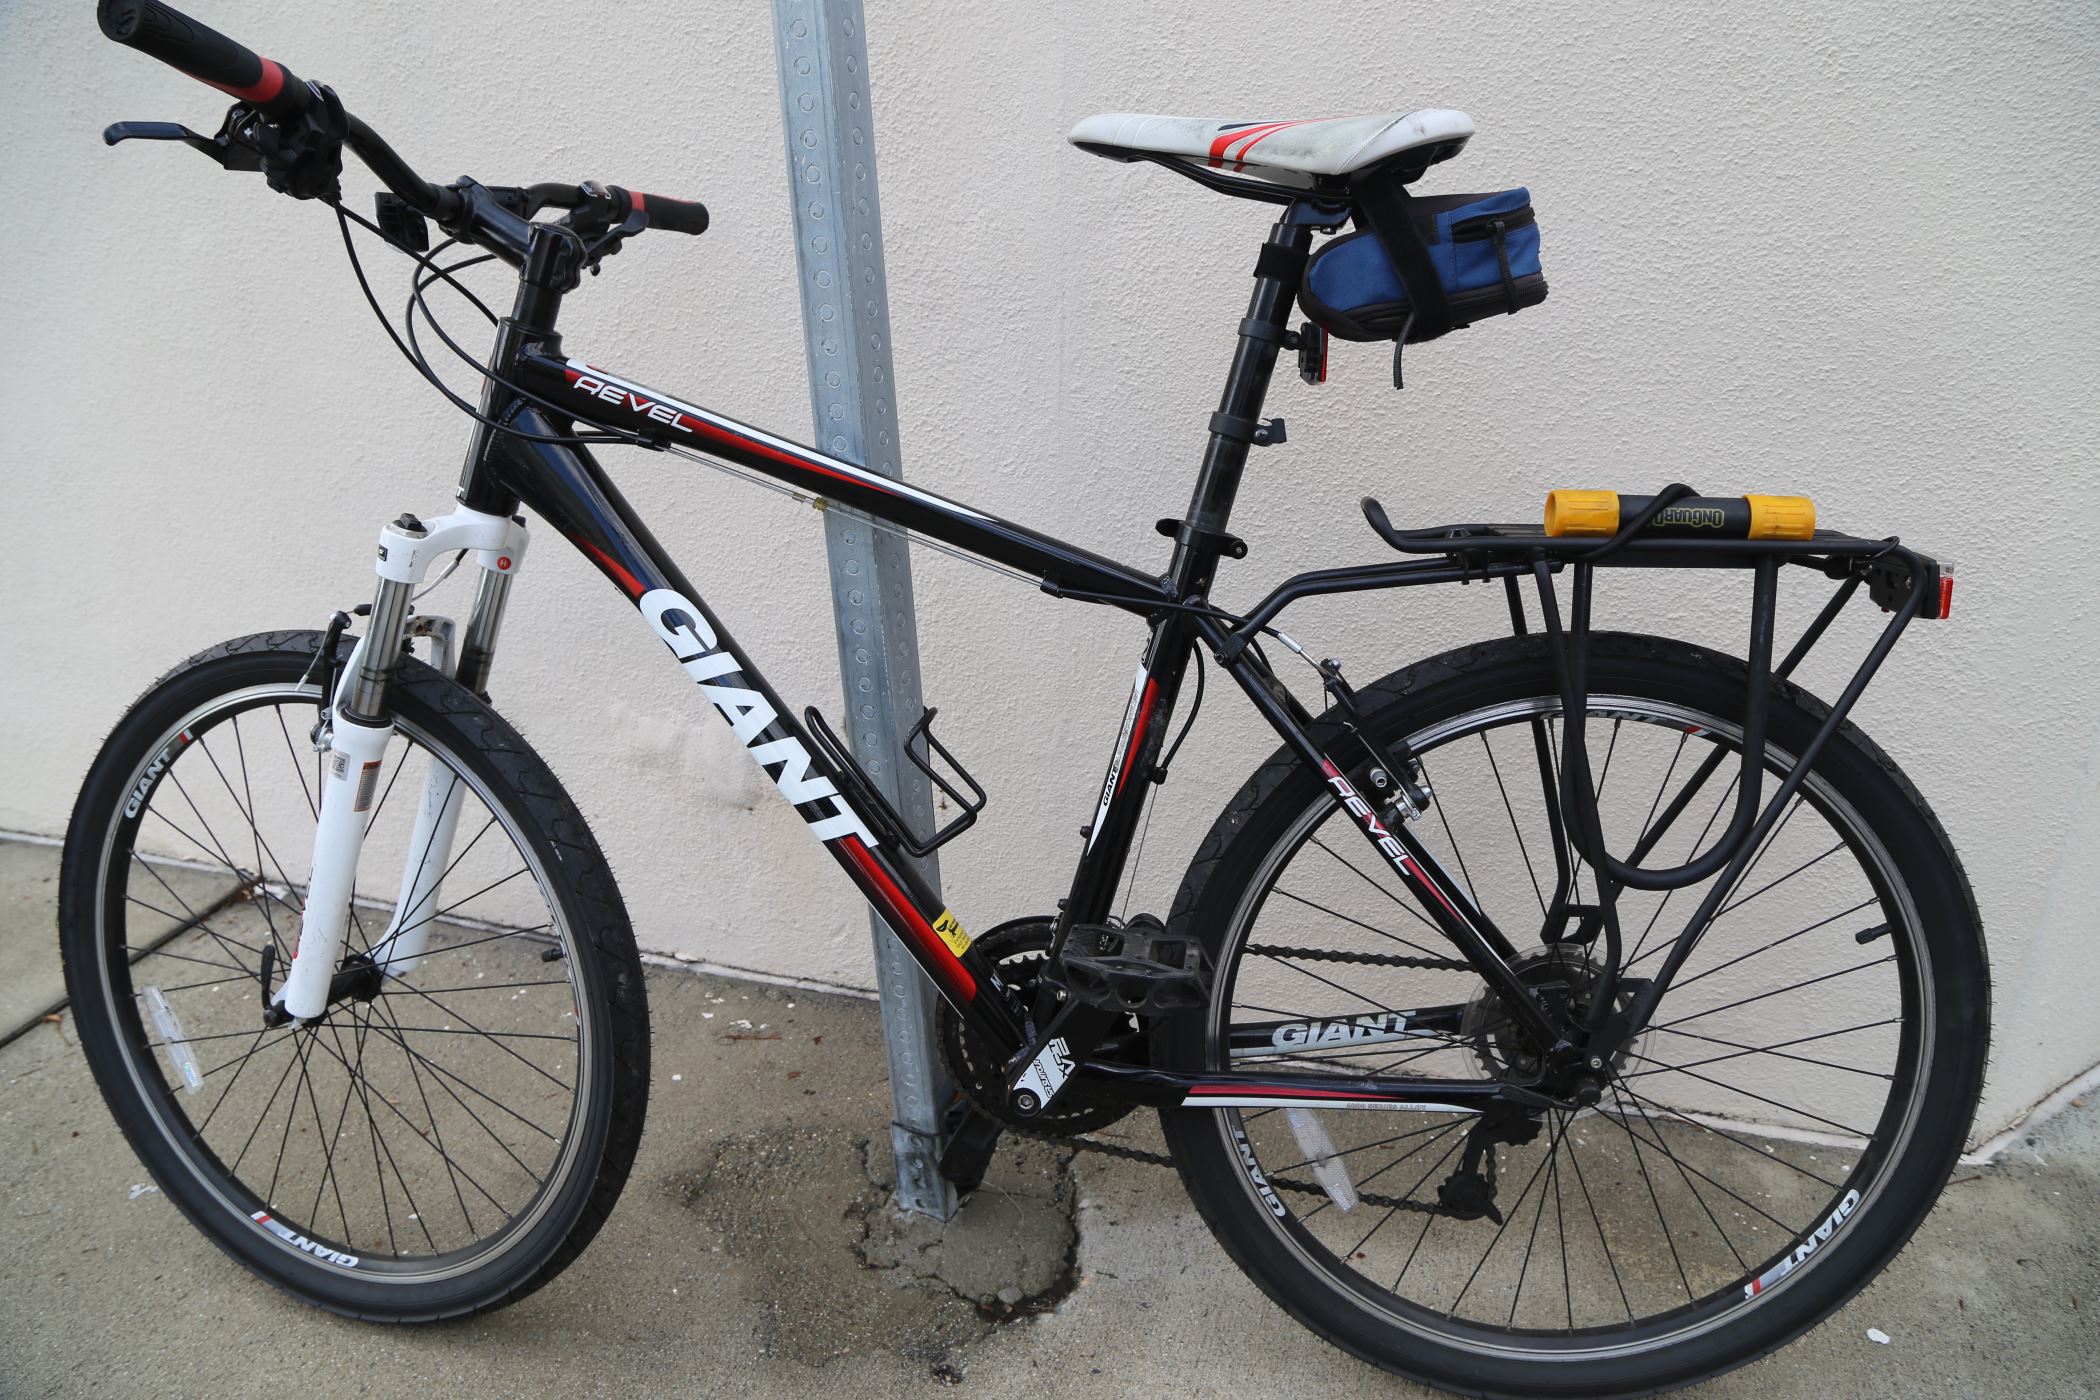 Bike with rack holding U-lock